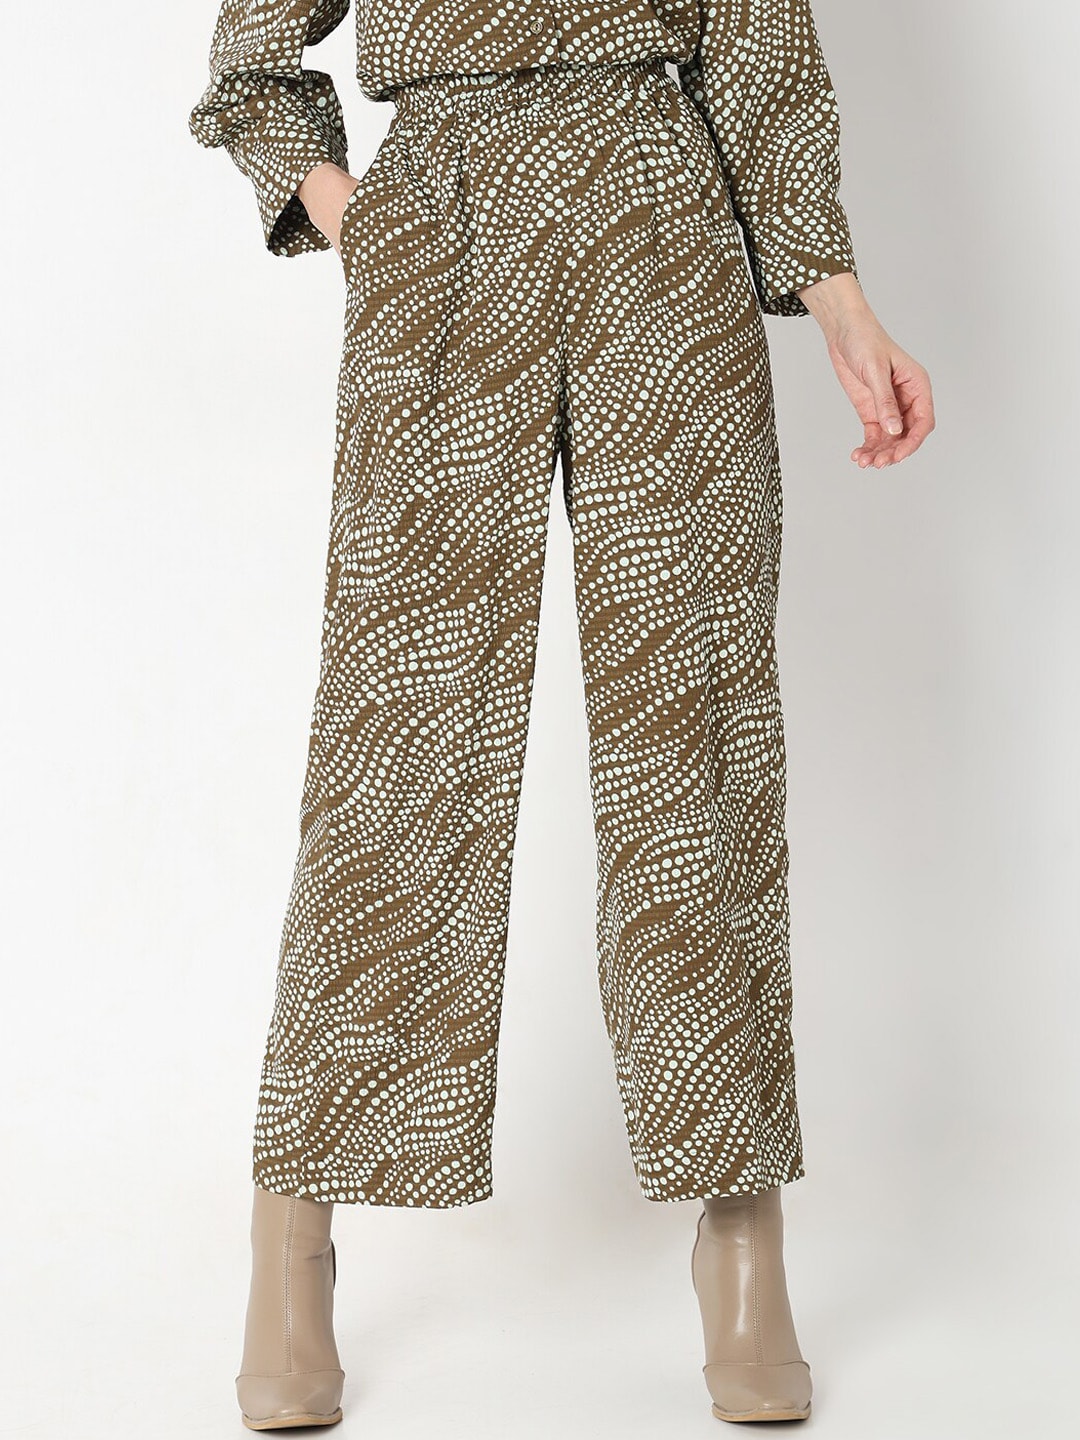 Vero Moda Women Geometric Printed Straight Fit High-Rise Culottes Trousers Price in India